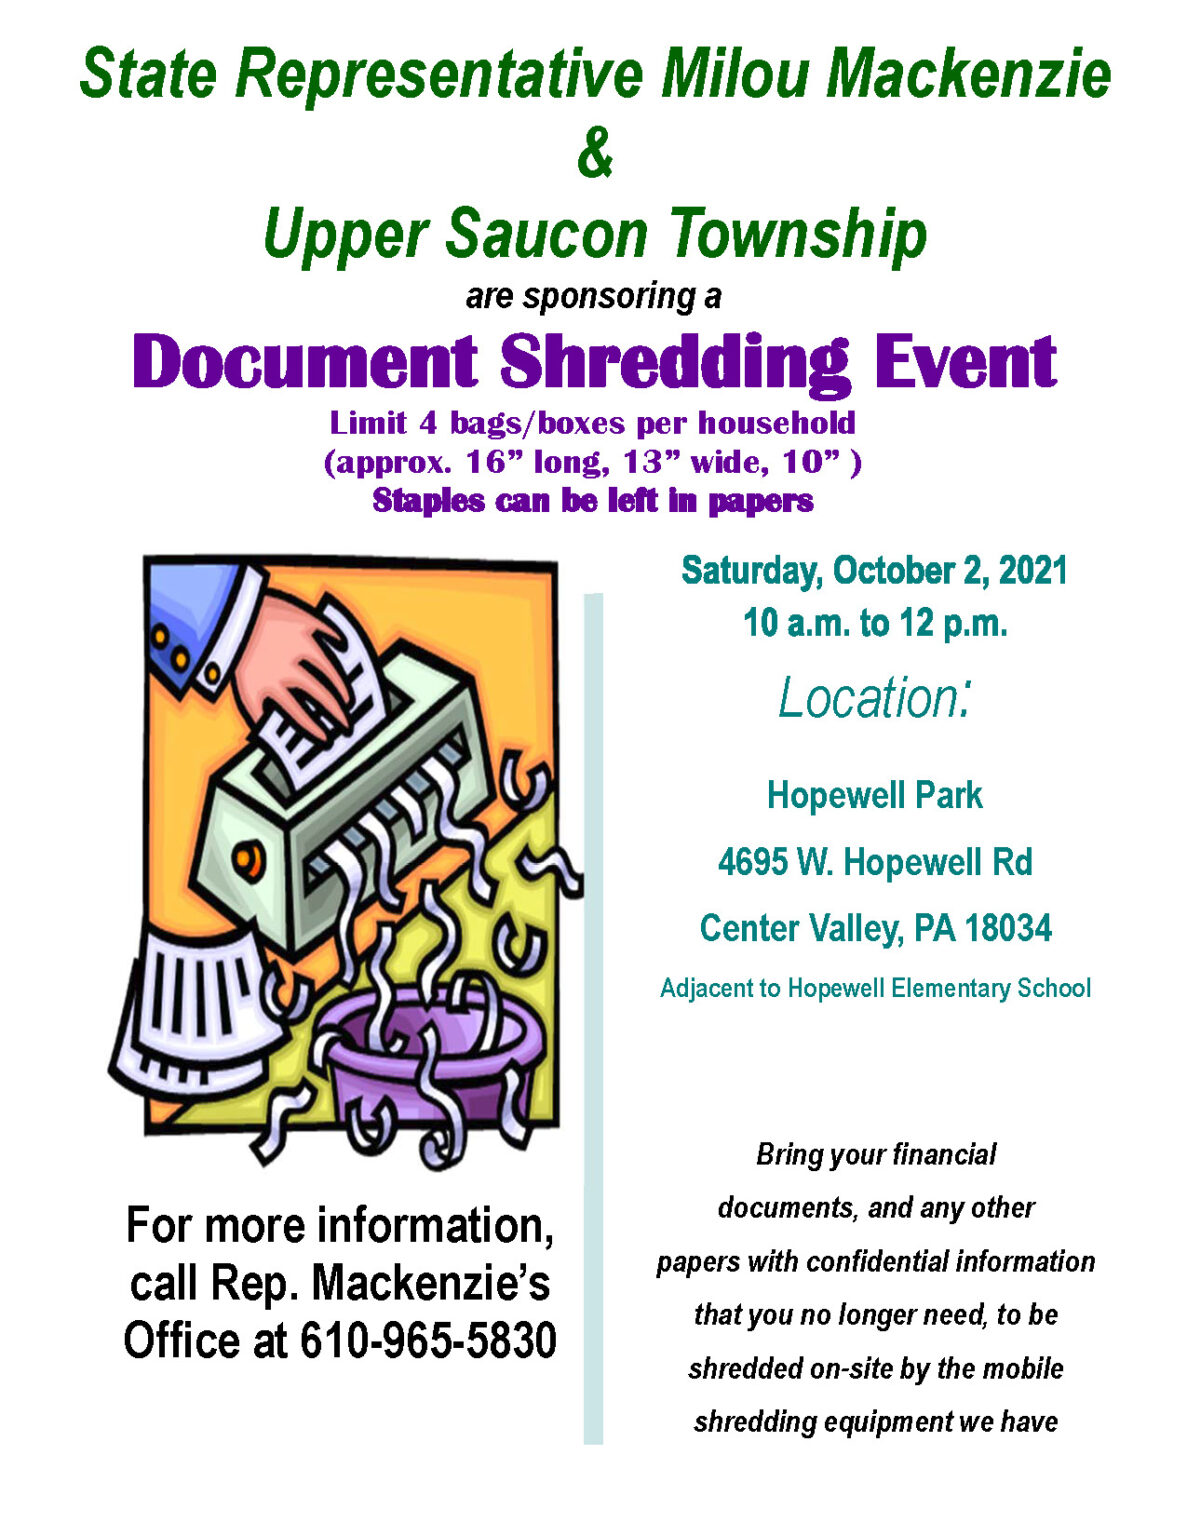 Paper Shredding Event Upper Saucon Township Lehigh County, Pennsylvania